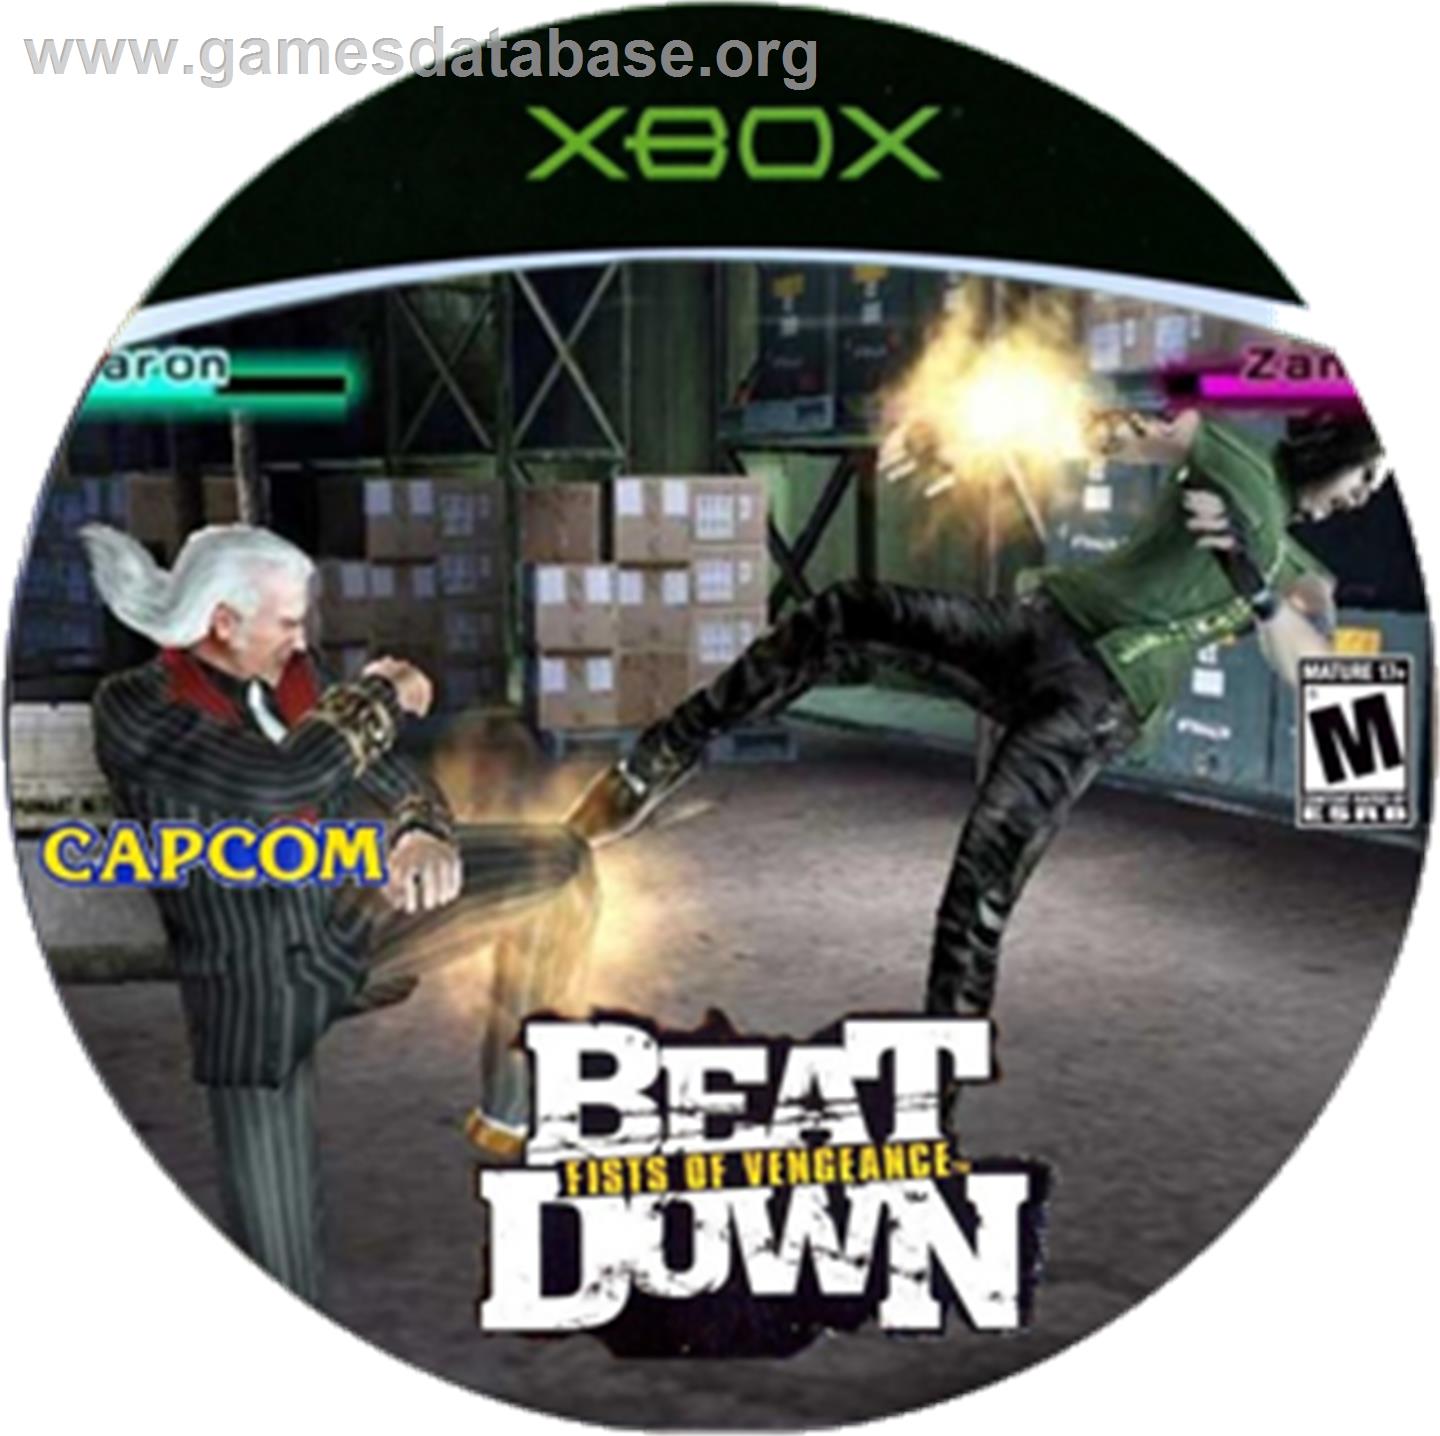 Beat Down: Fists of Vengeance - Microsoft Xbox - Artwork - CD